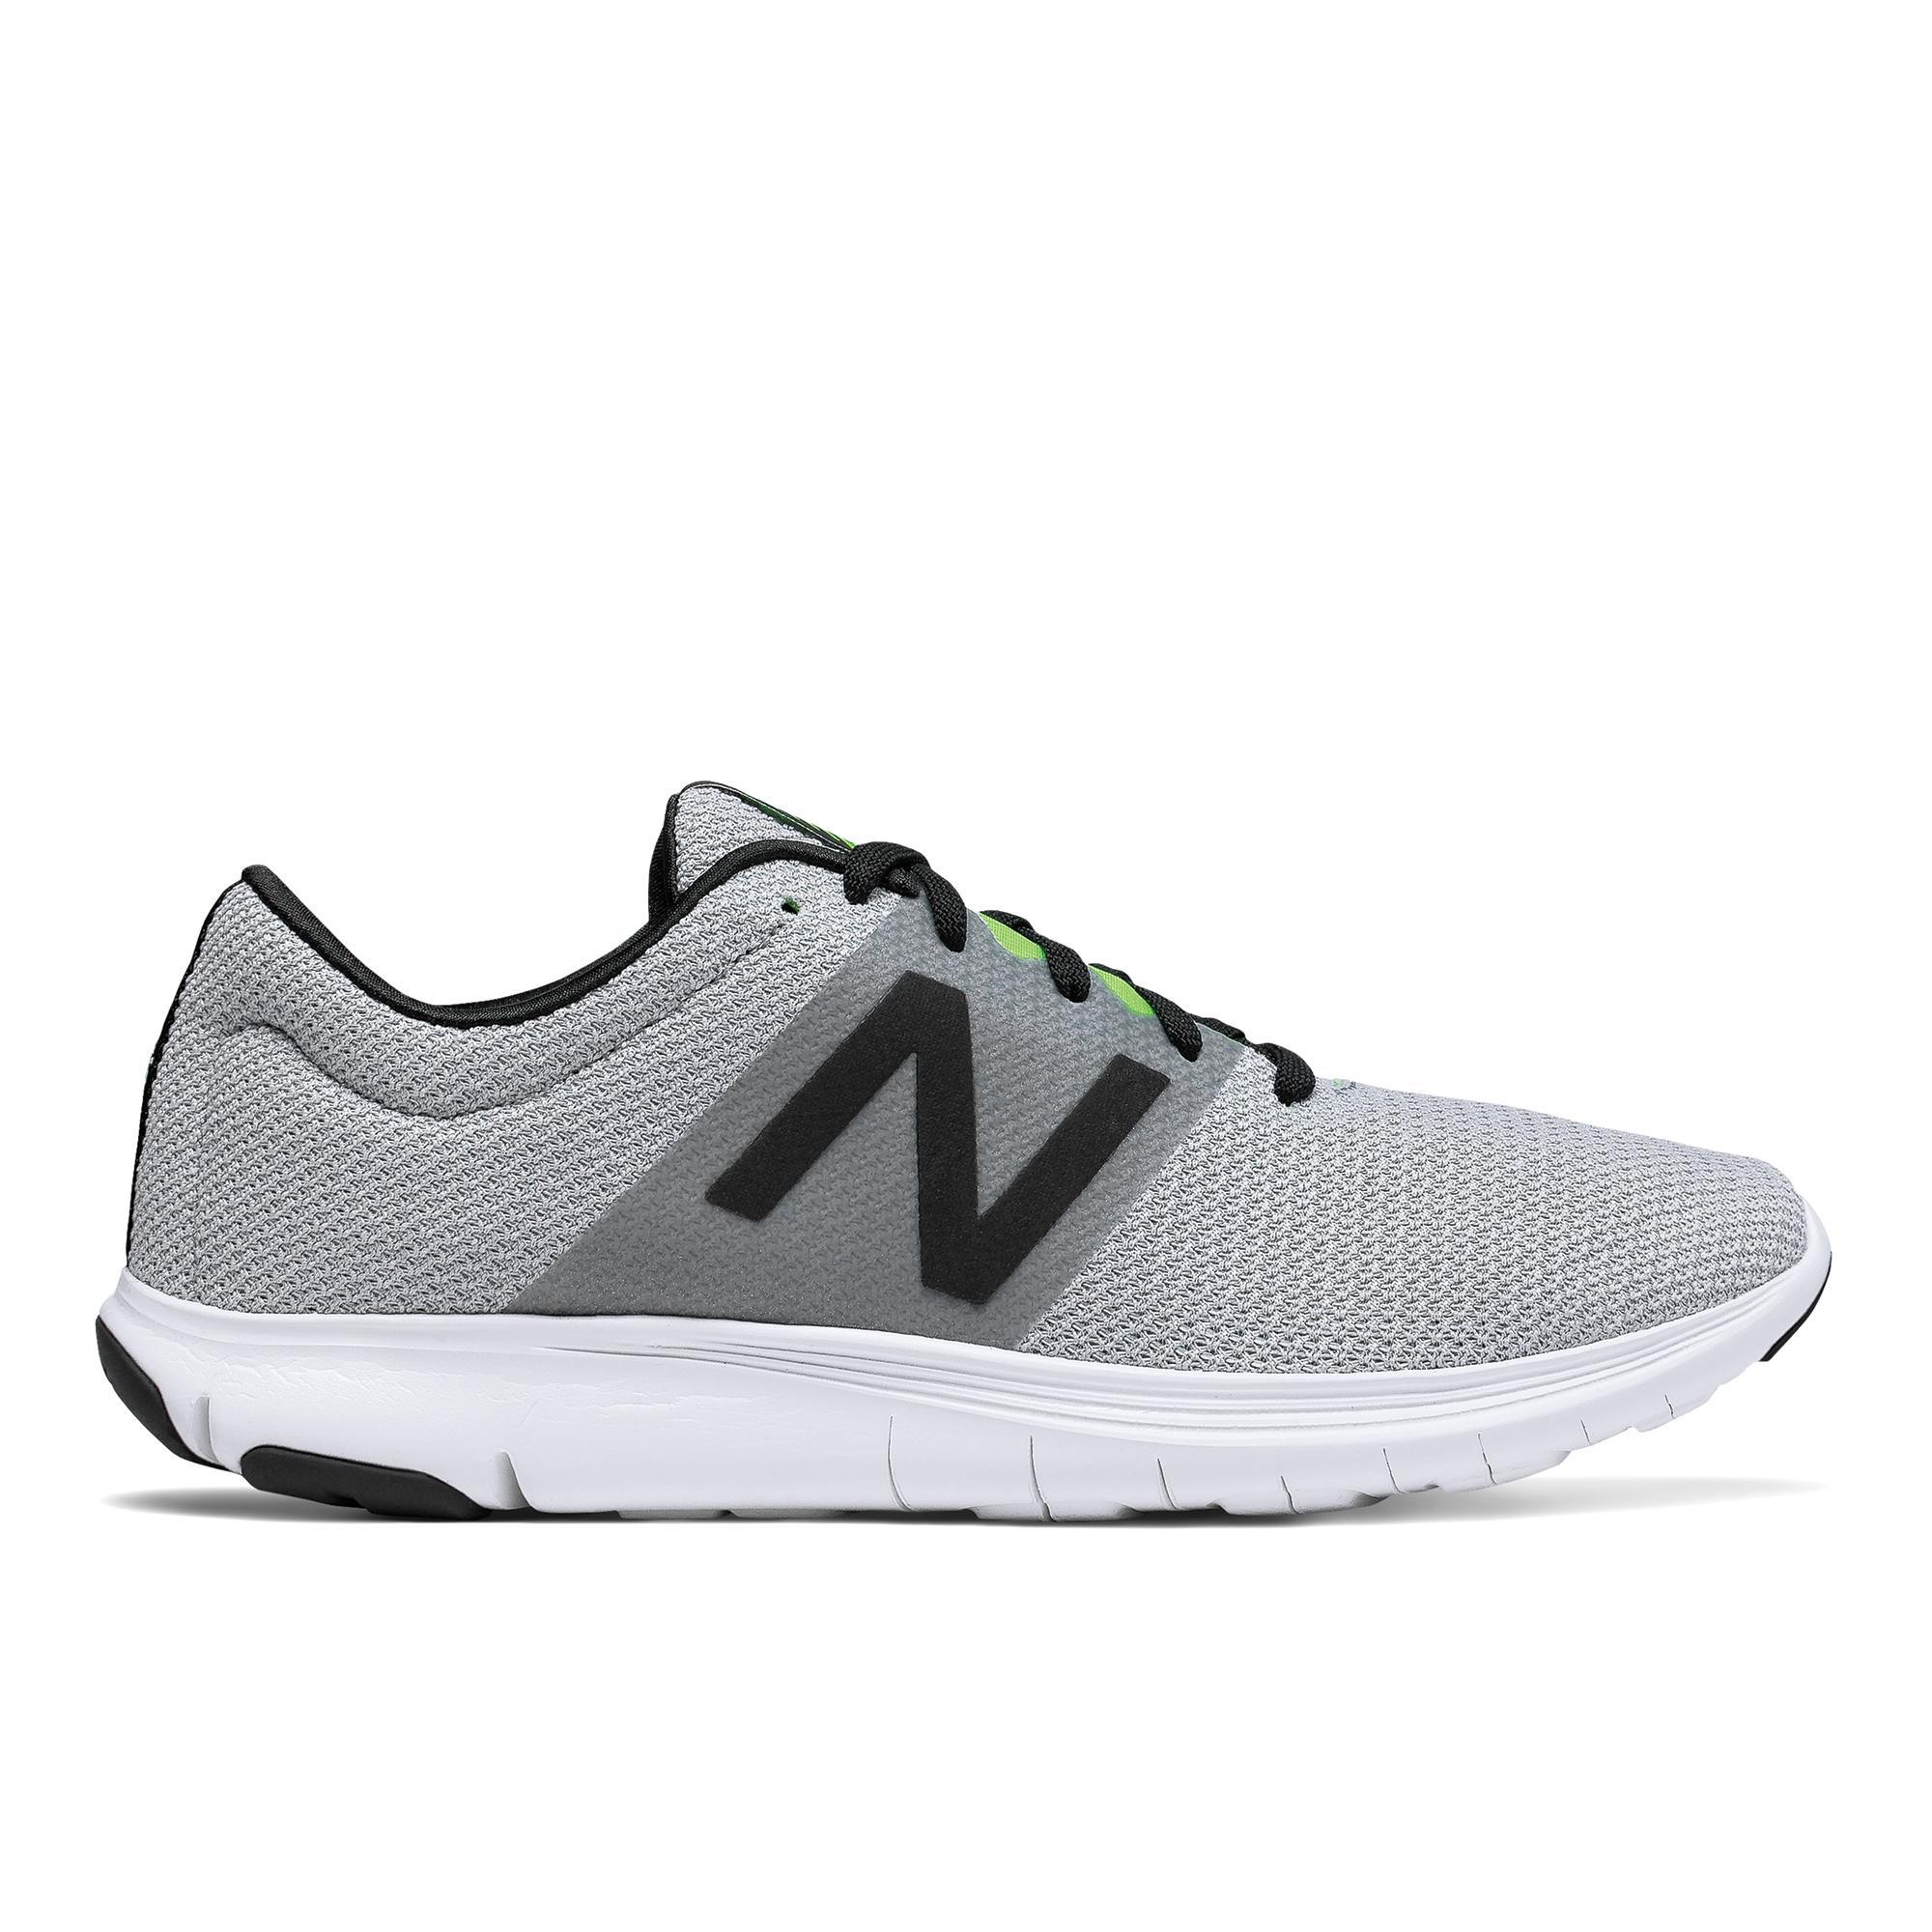 New Balance Men's Running Shoes (Grey)